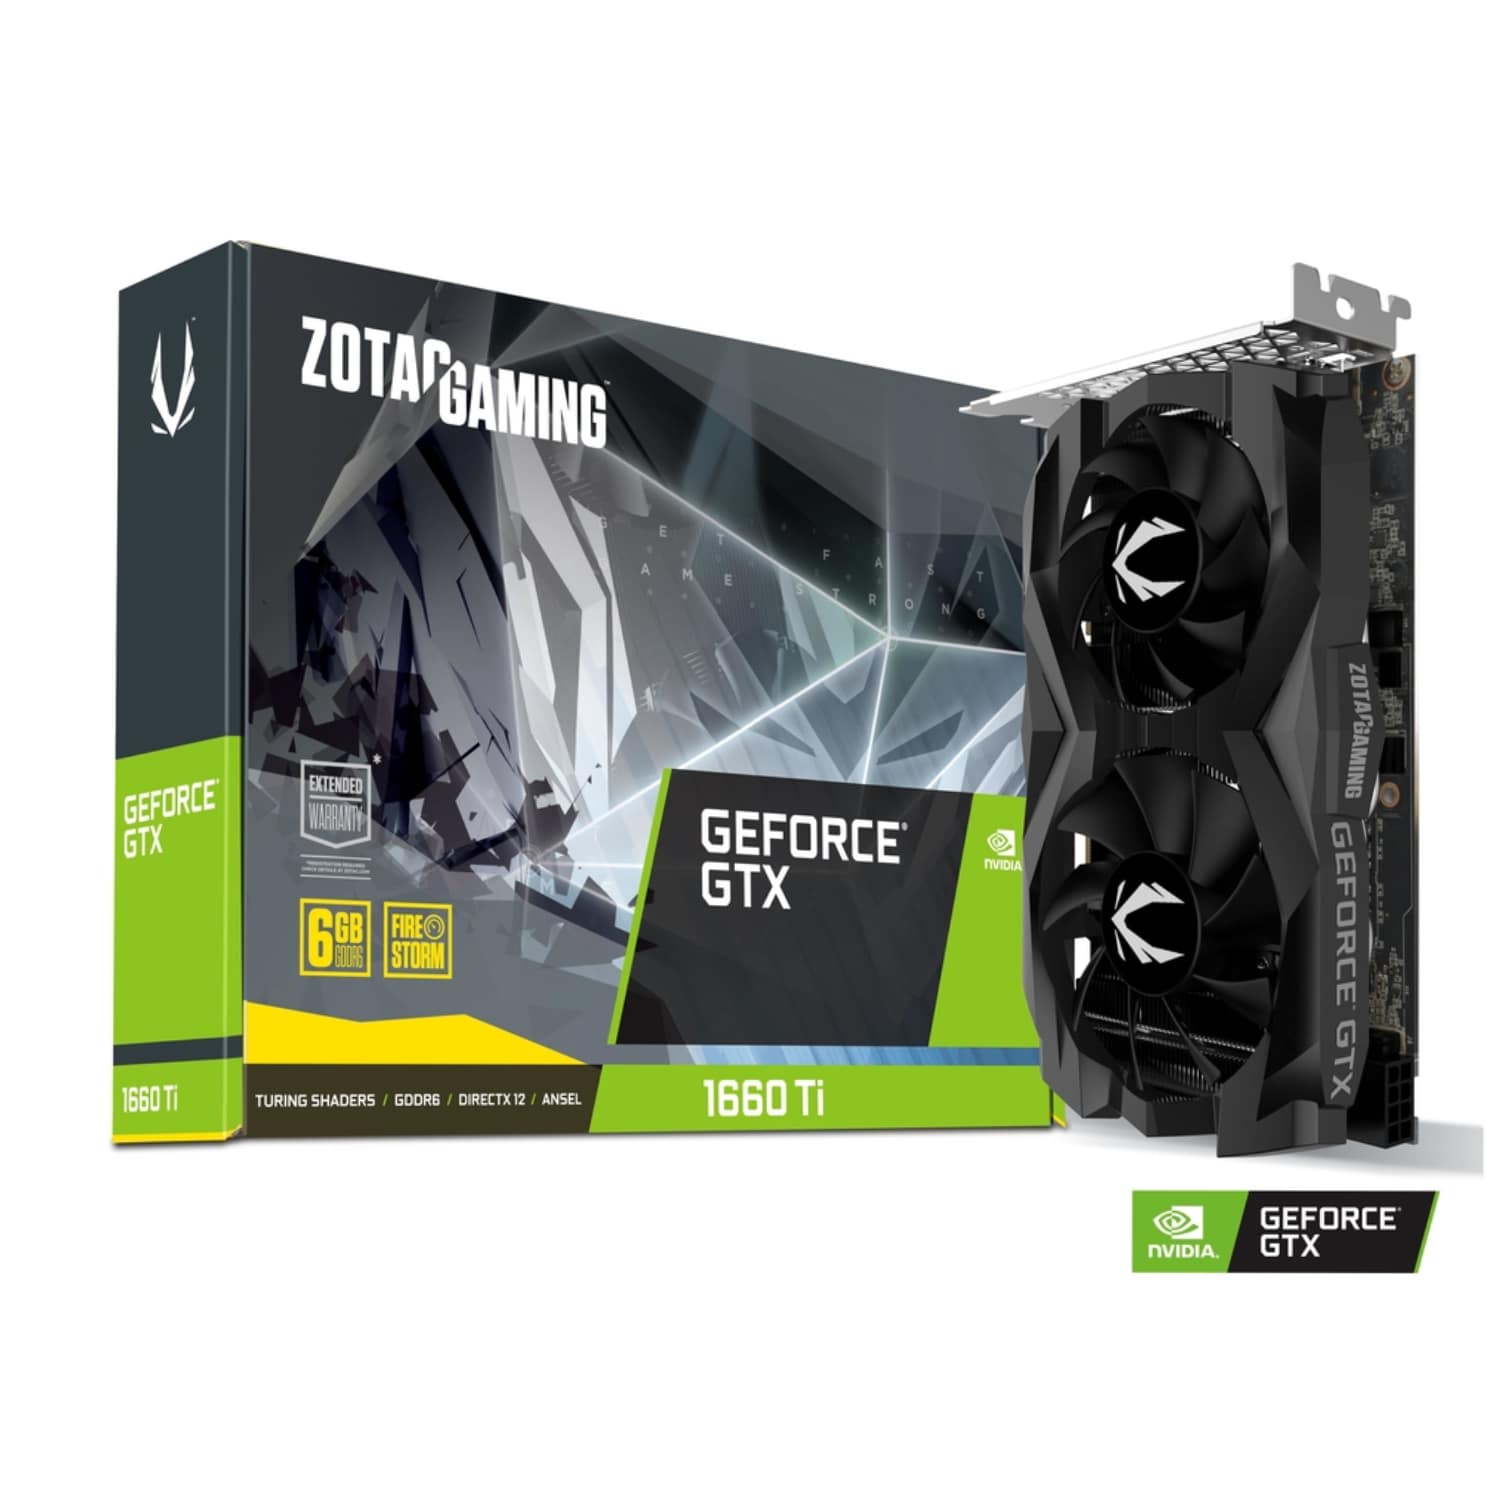 ZOTAC GAMING GeForce GTX 1660 Ti 6GB GDDR6